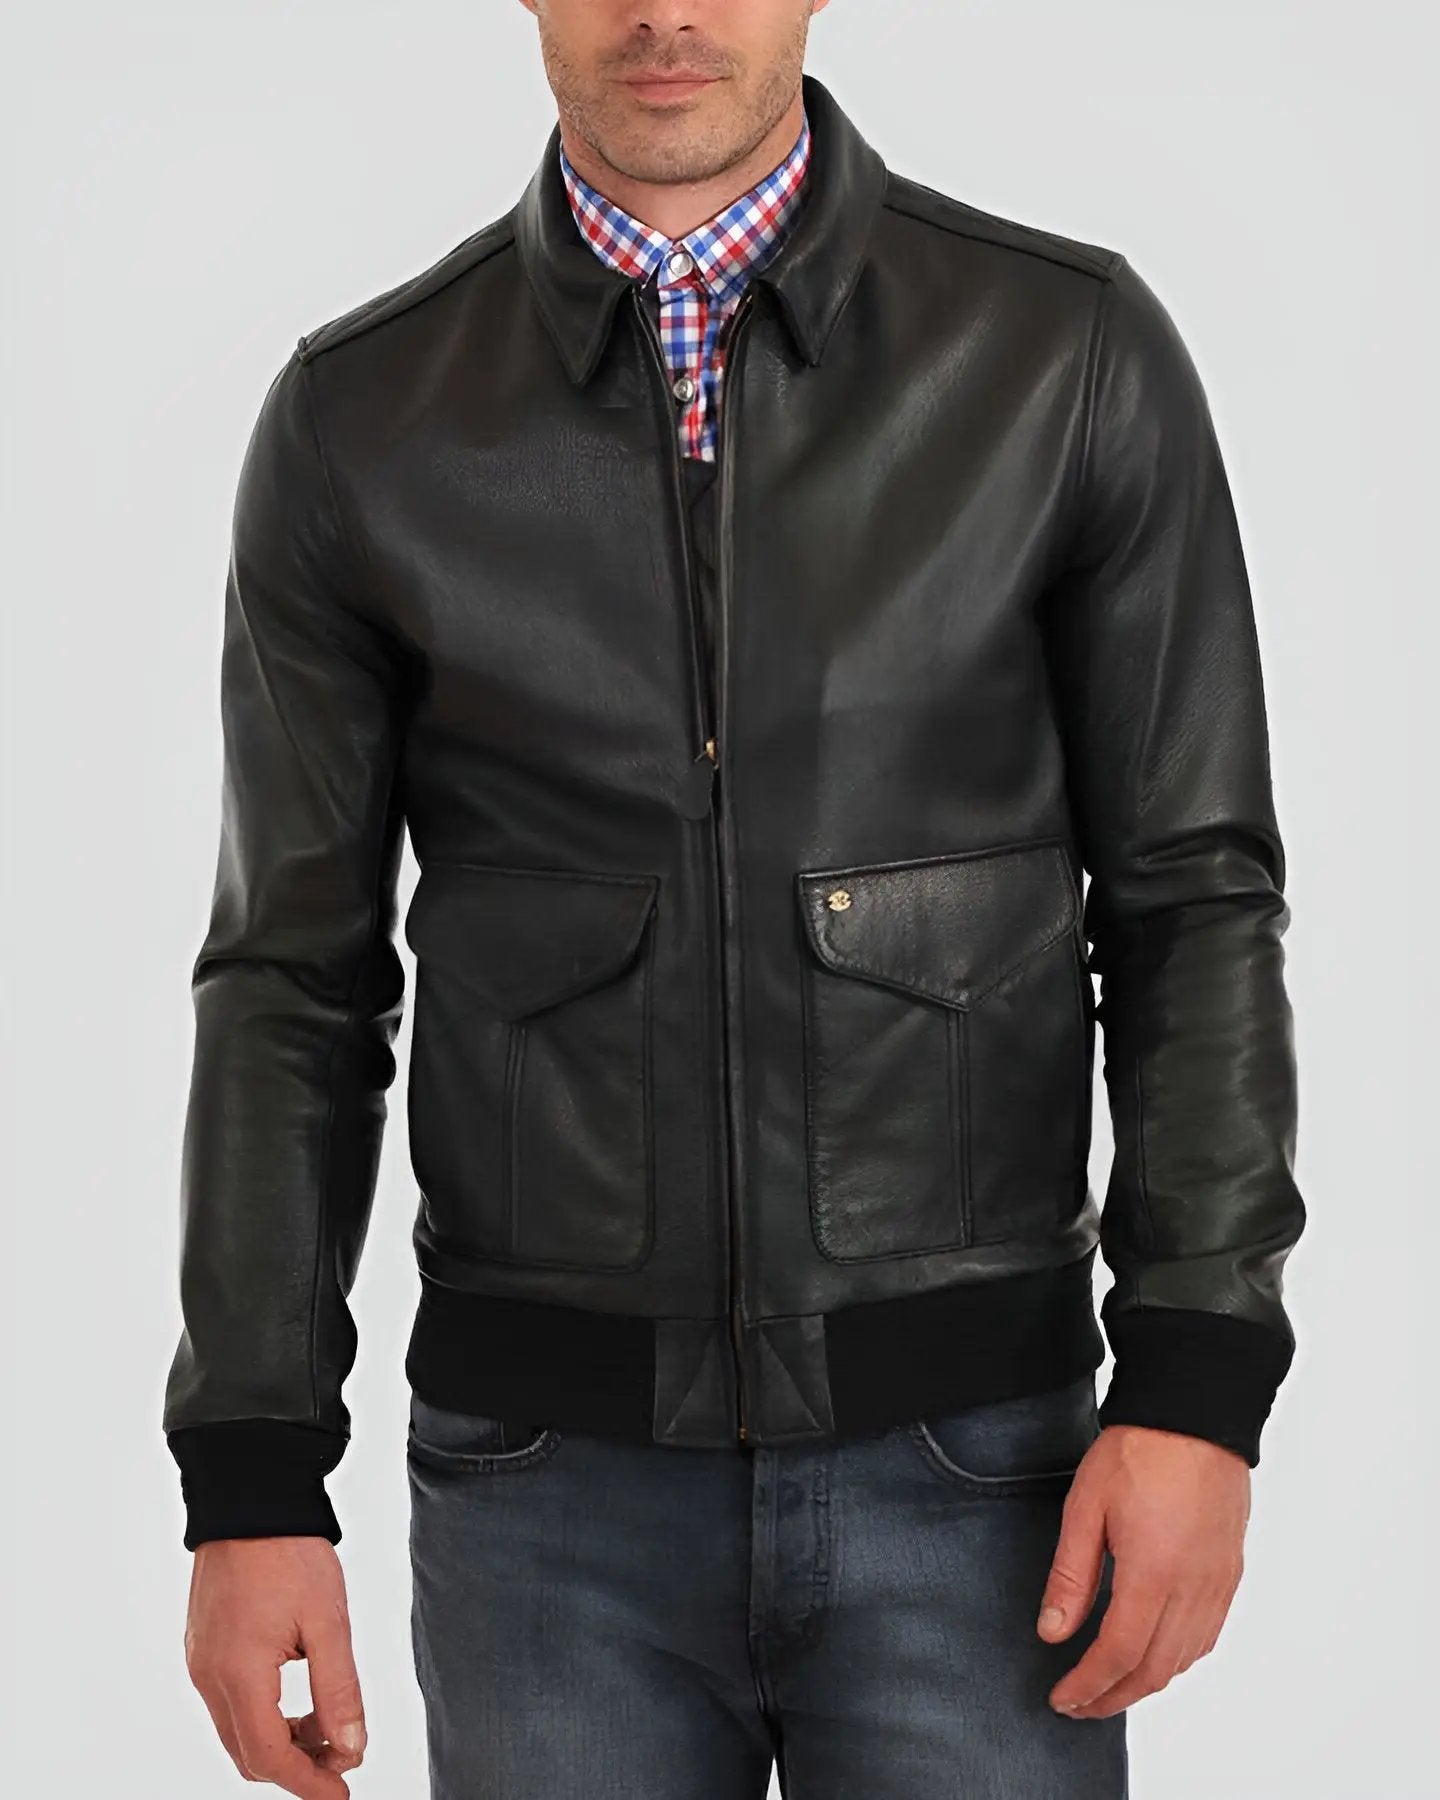 Mens Kyros Black Bomber Jacket - Leather Jackets NYC Leather